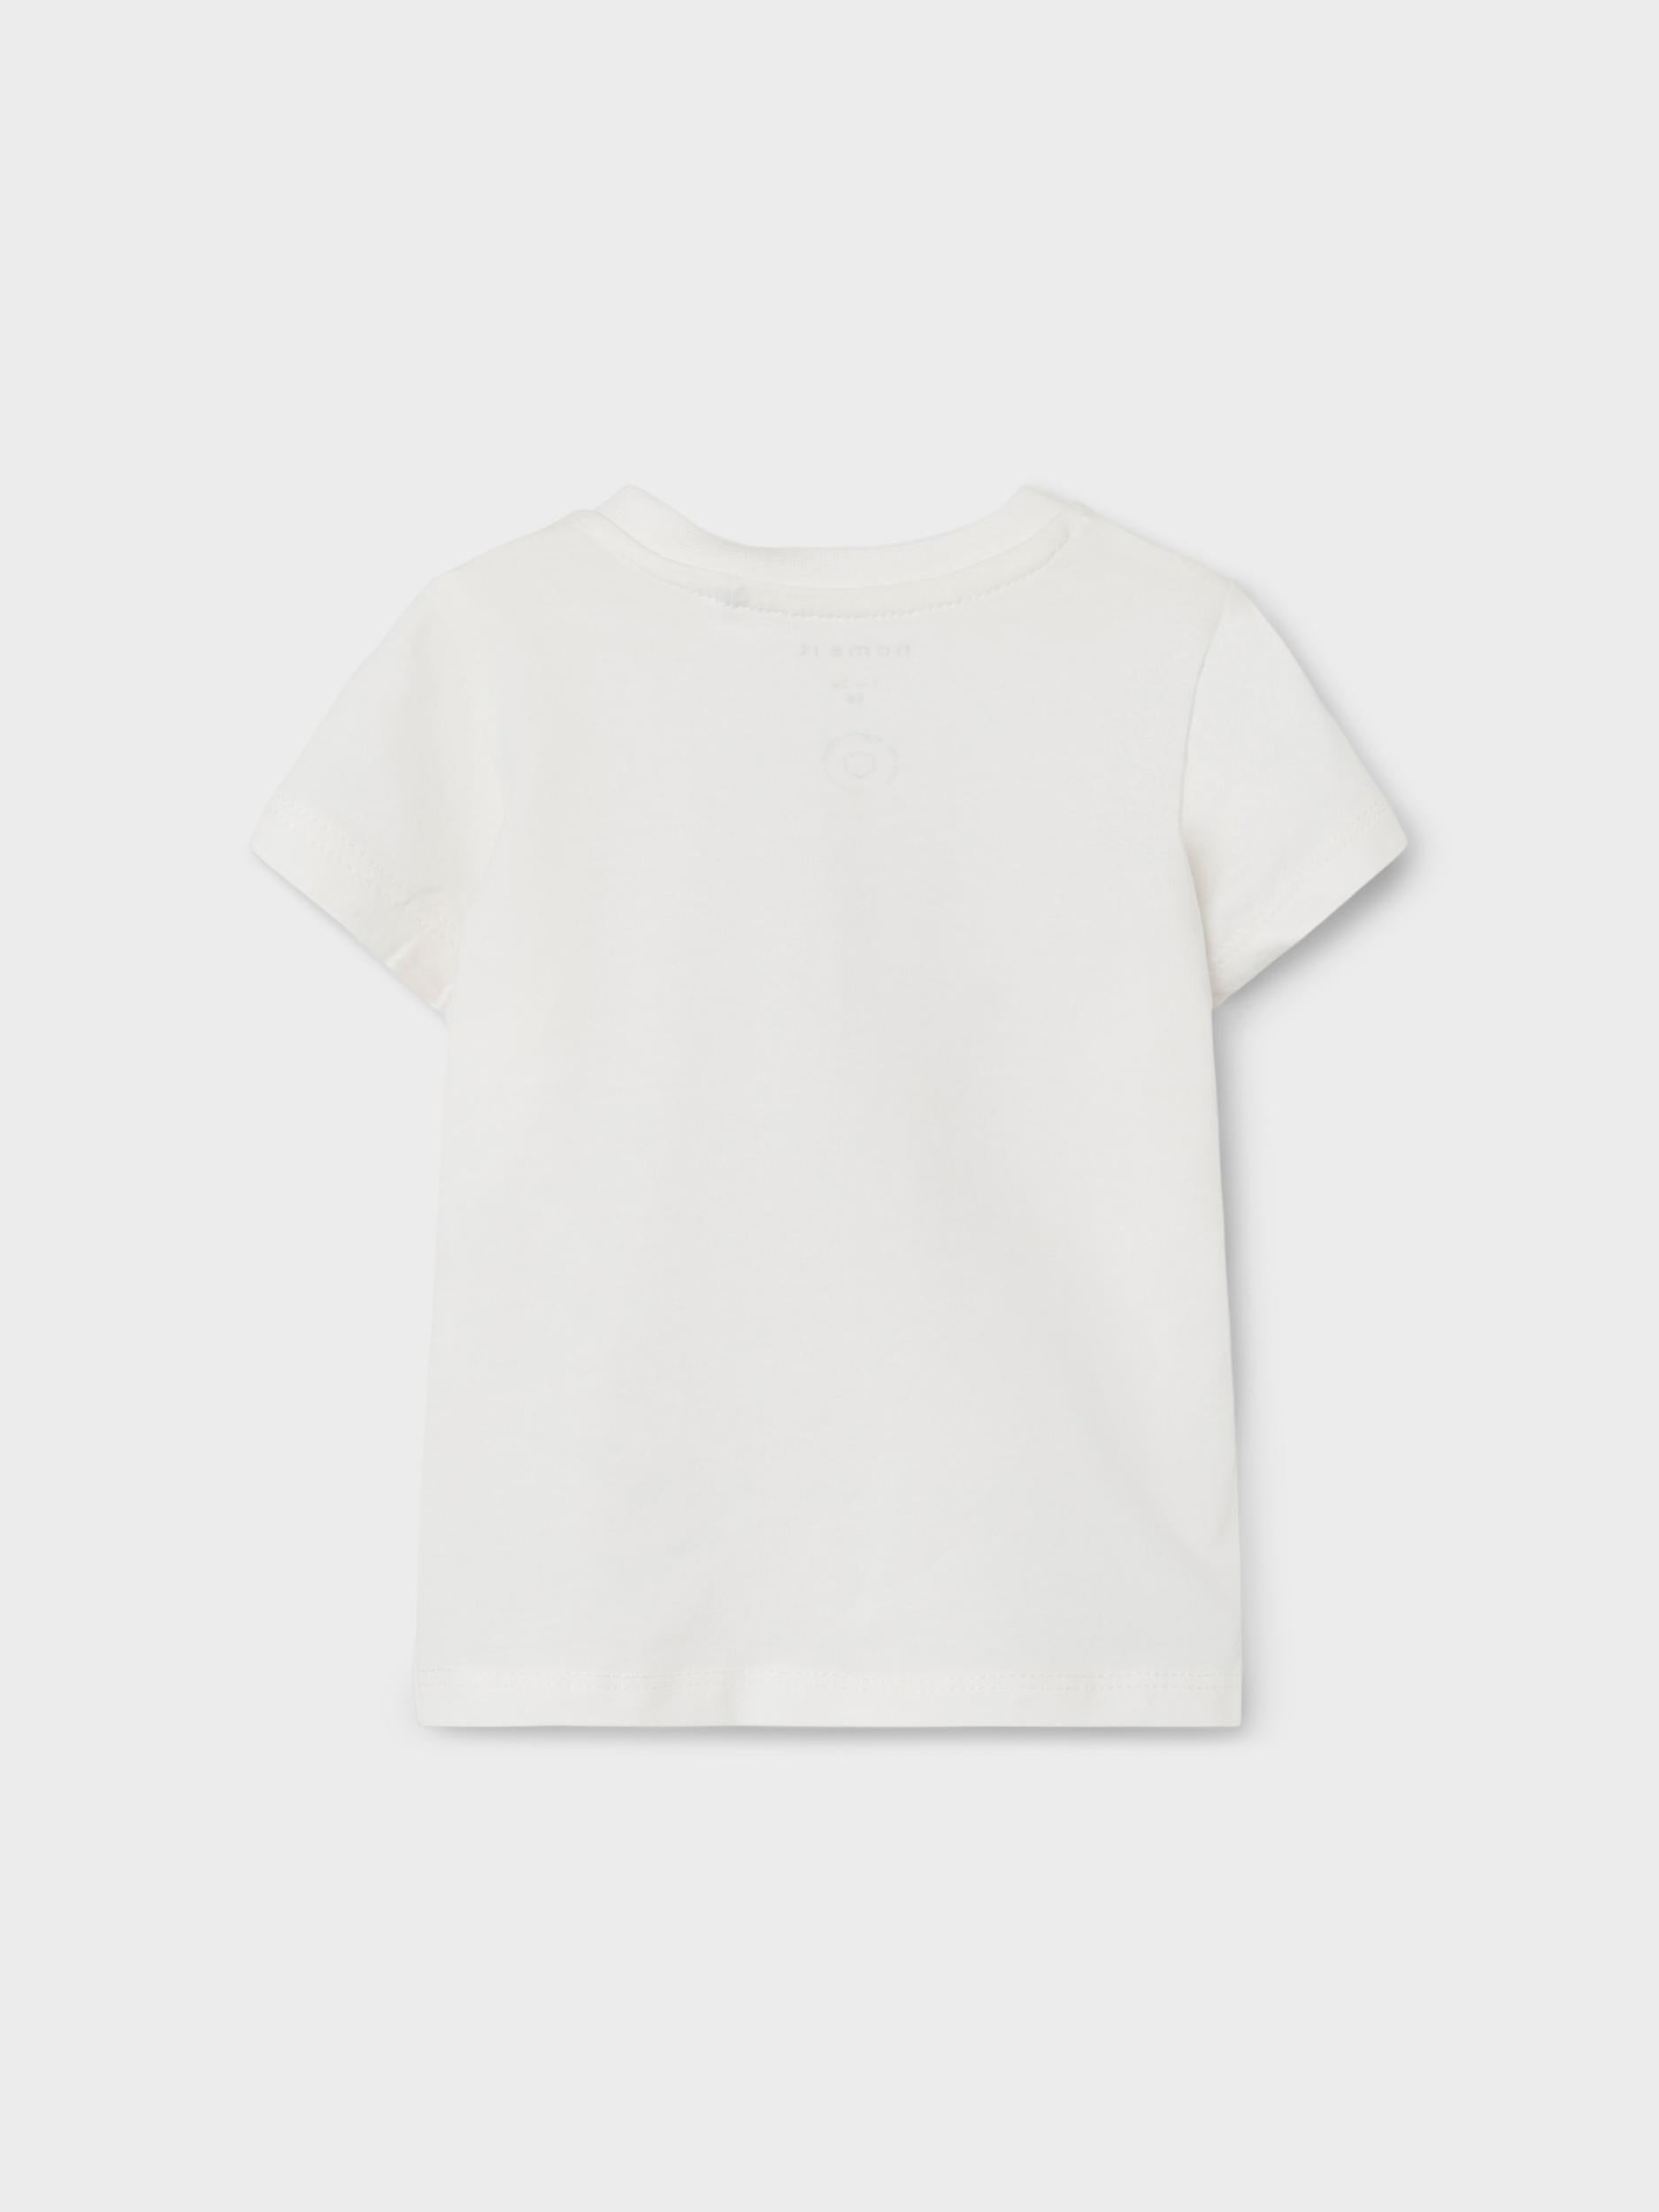 Jalte Short Sleeve Top - White Alyssum Rear View